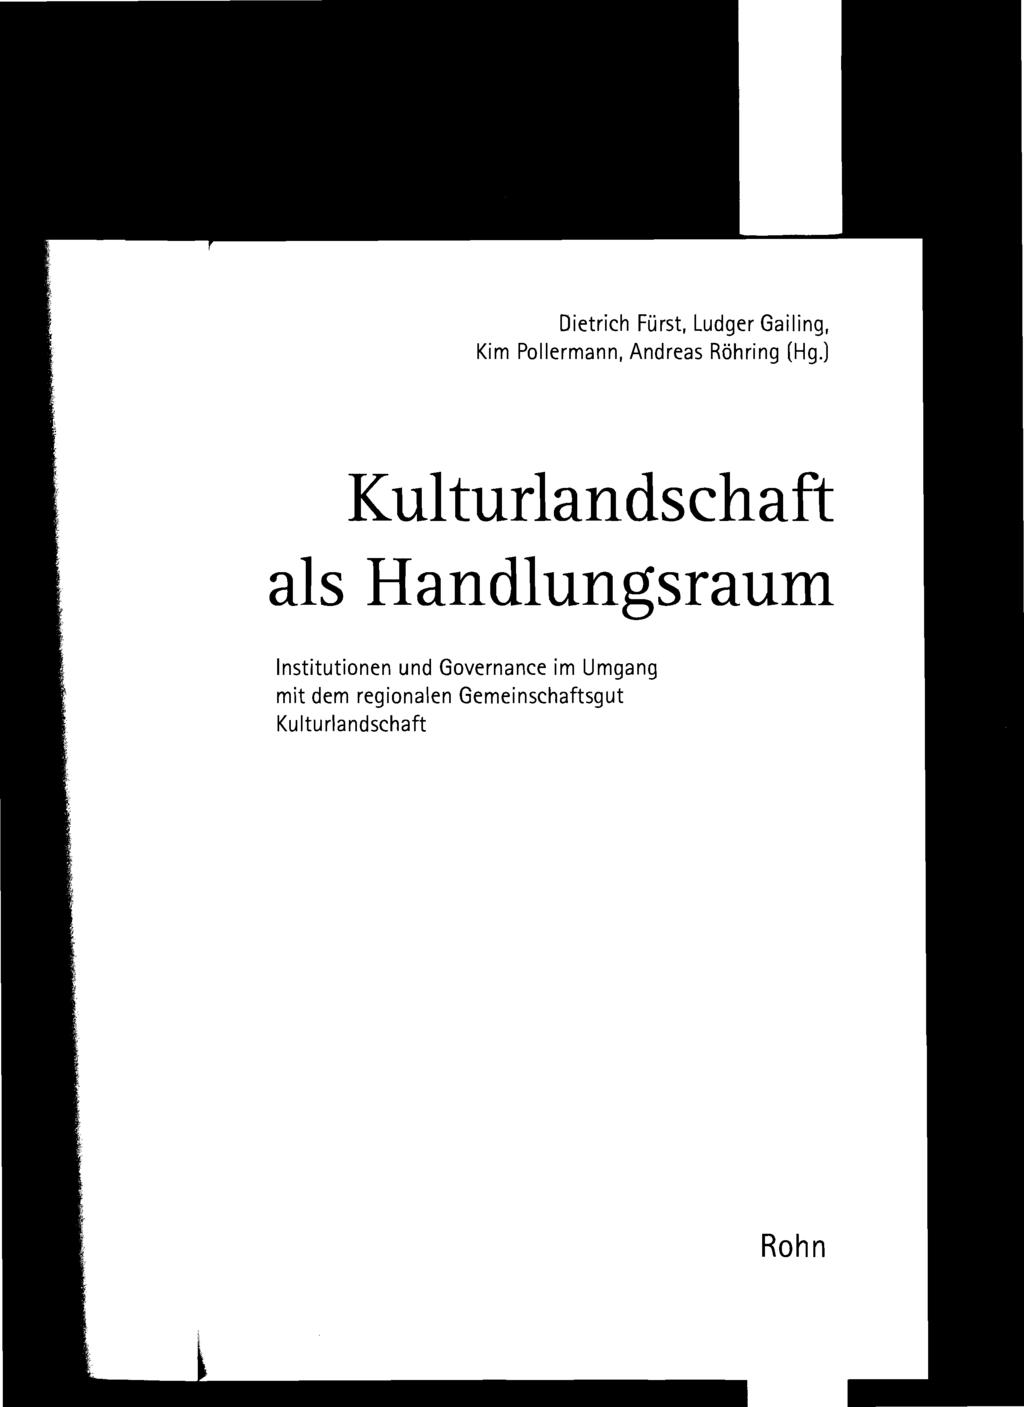 Dietrich Fürst, Ludger Gailing, Kim Pollermann, Andreas Röhring (Hg.